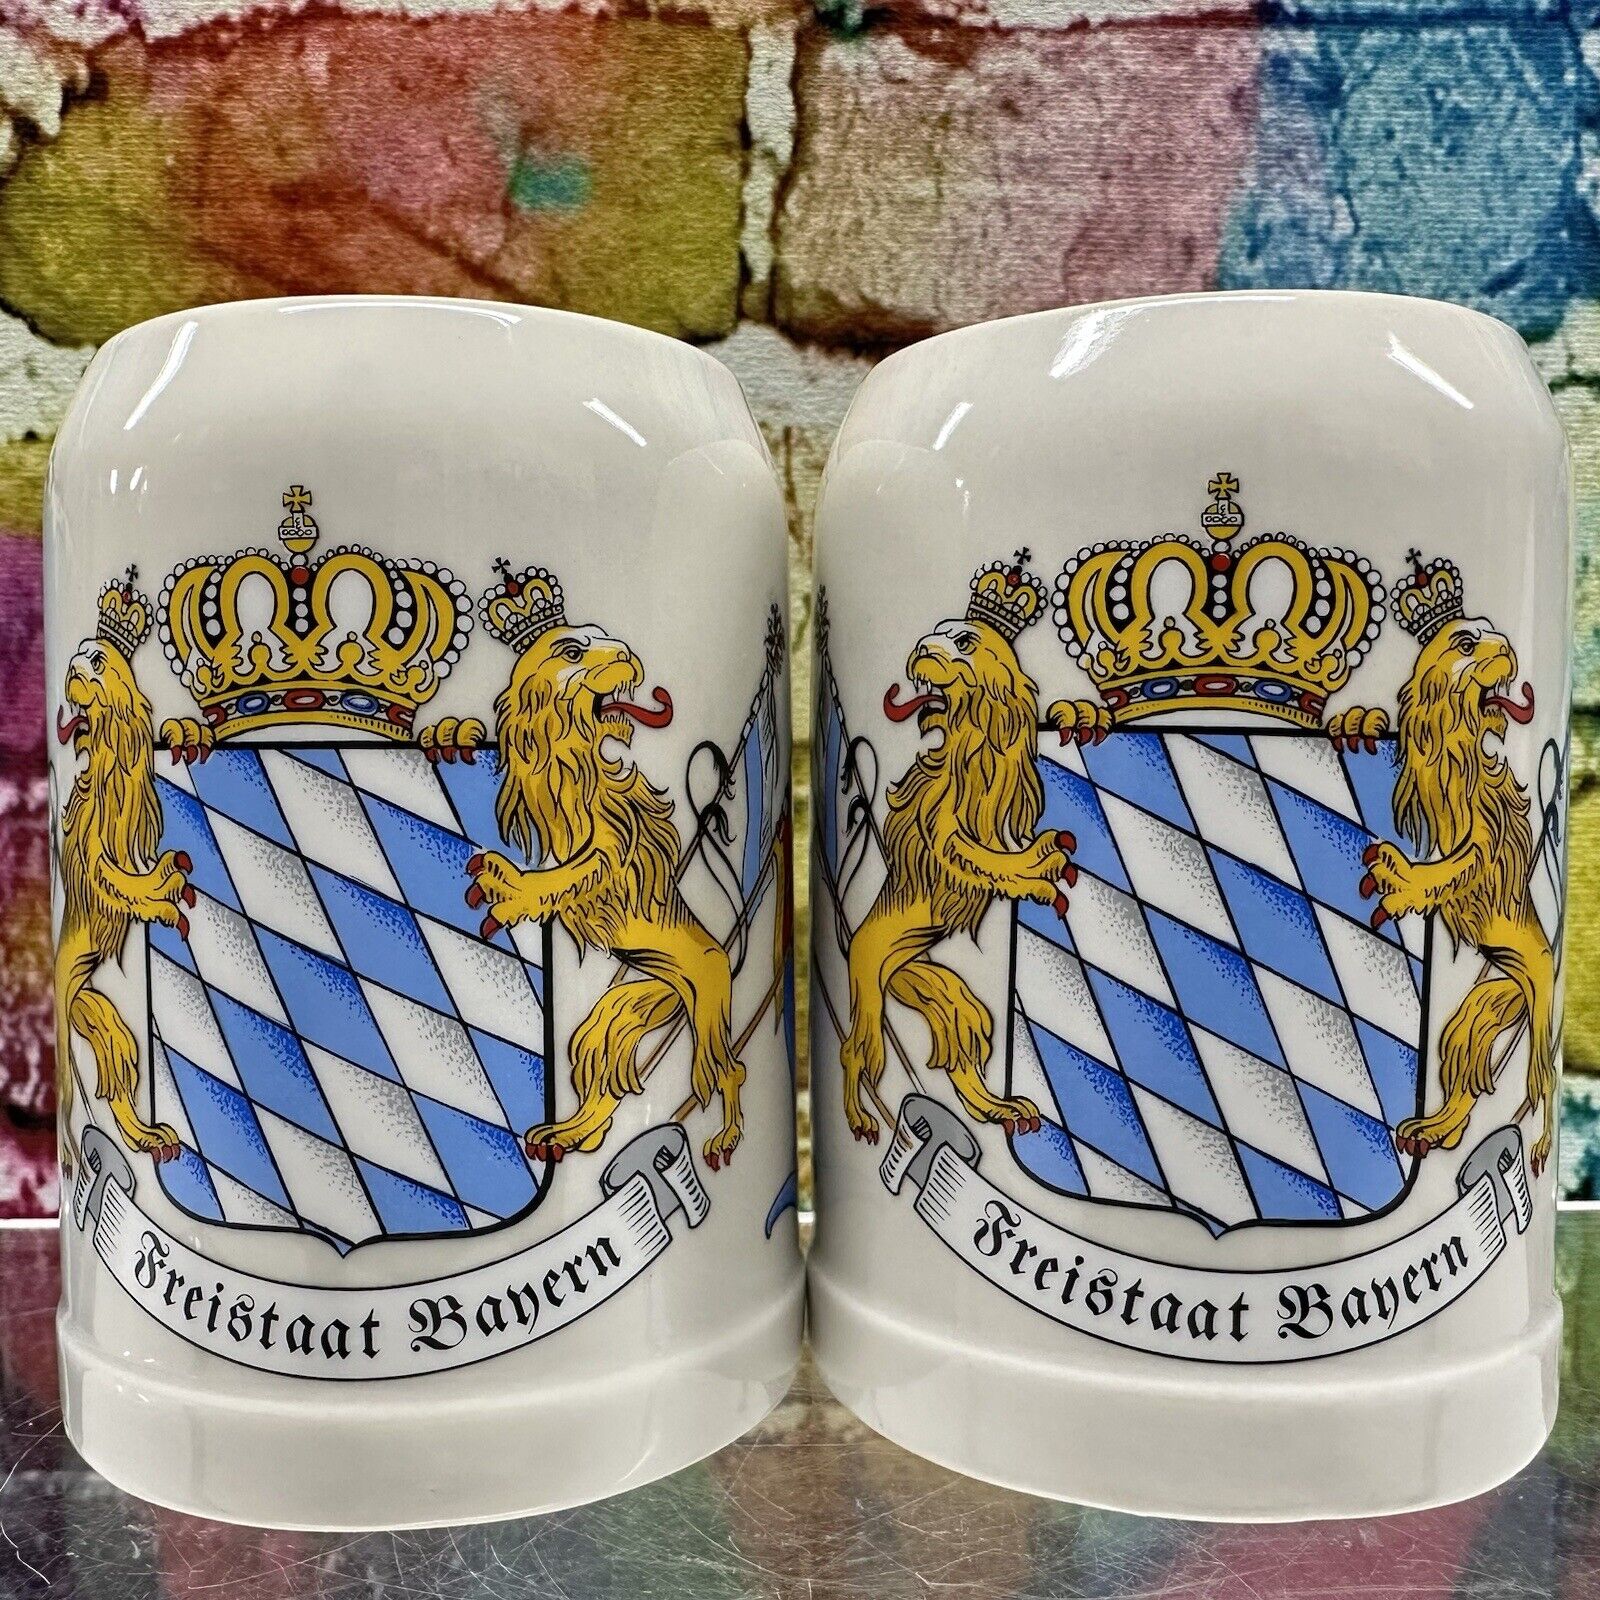 Freistaat Bayern Stoneware Beer Stein Mug 0.5L Mug Free State of Bavaria Germany